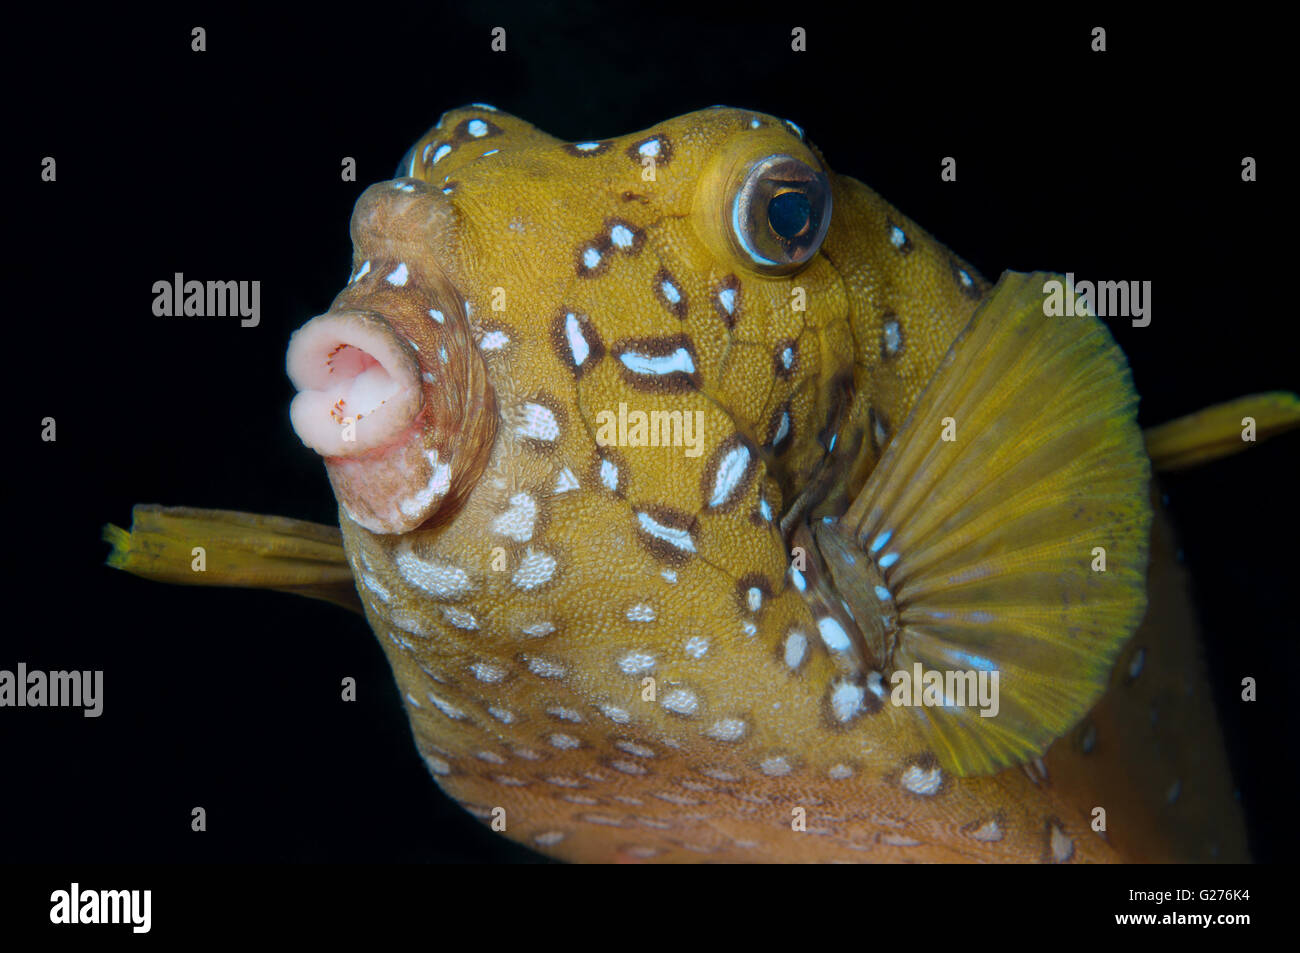 Black-spotted boxfish, Blue-spotted boxfish, Yellow boxfish, Cofferfish, Cowfish or Cubical boxfish (Ostracion cubicus) Stock Photo